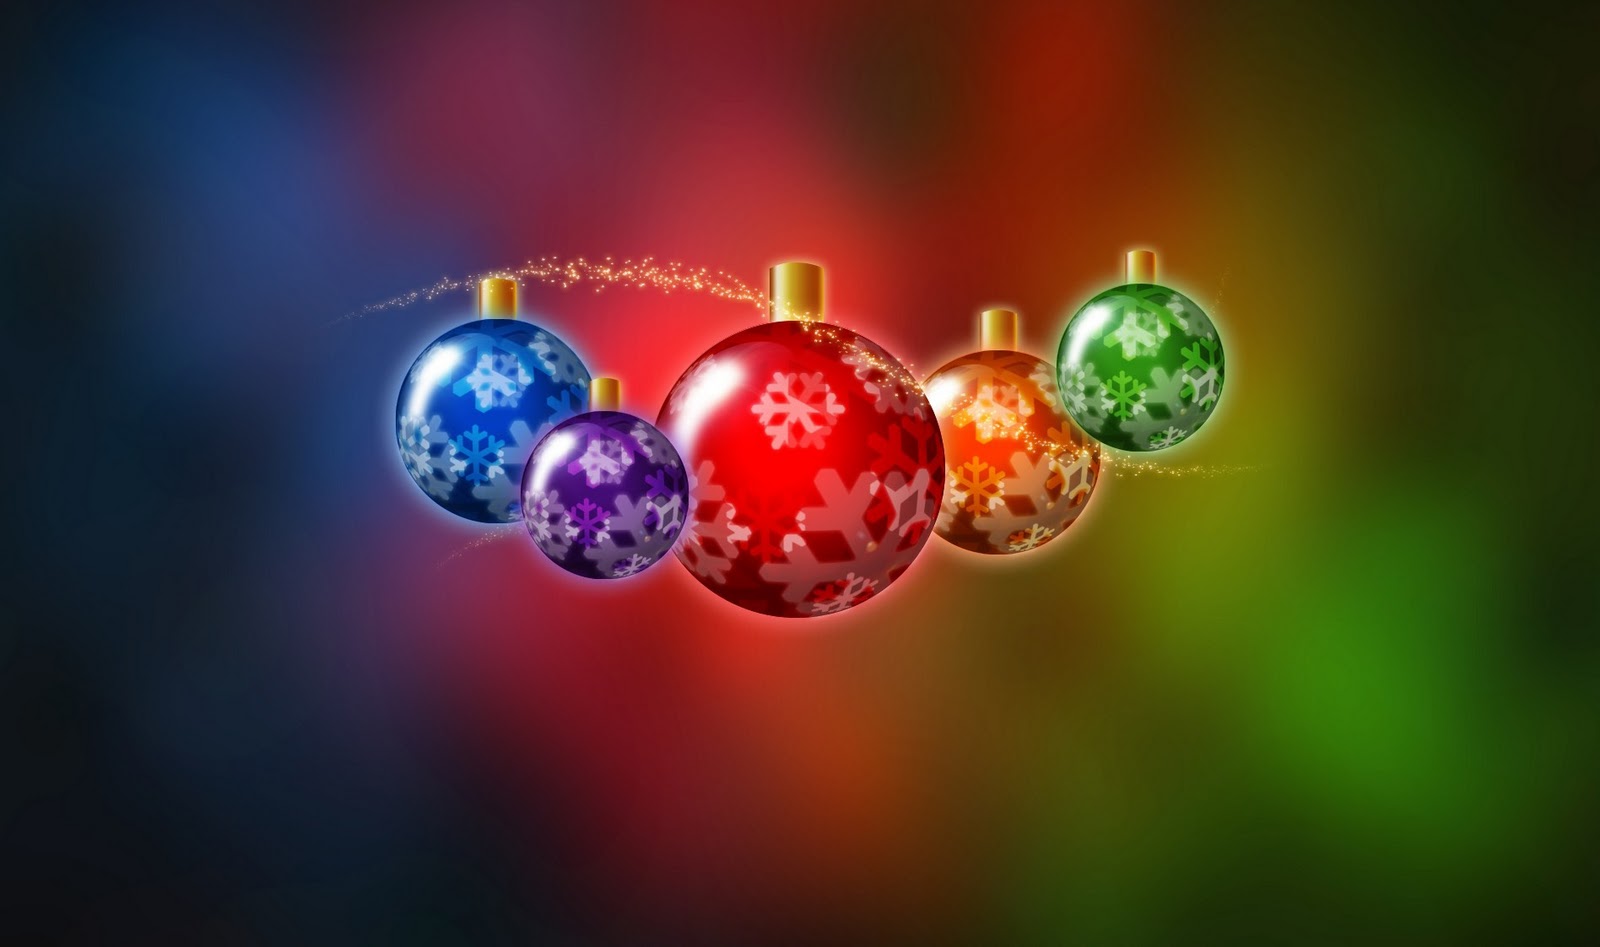 http://1.bp.blogspot.com/_Kpi0thIqeJI/TRHgAgPC_TI/AAAAAAAAA1E/u64mOvIsVhs/s1600/Christmas+HD+Wallpapers+1920x1200+%252821%2529.jpg